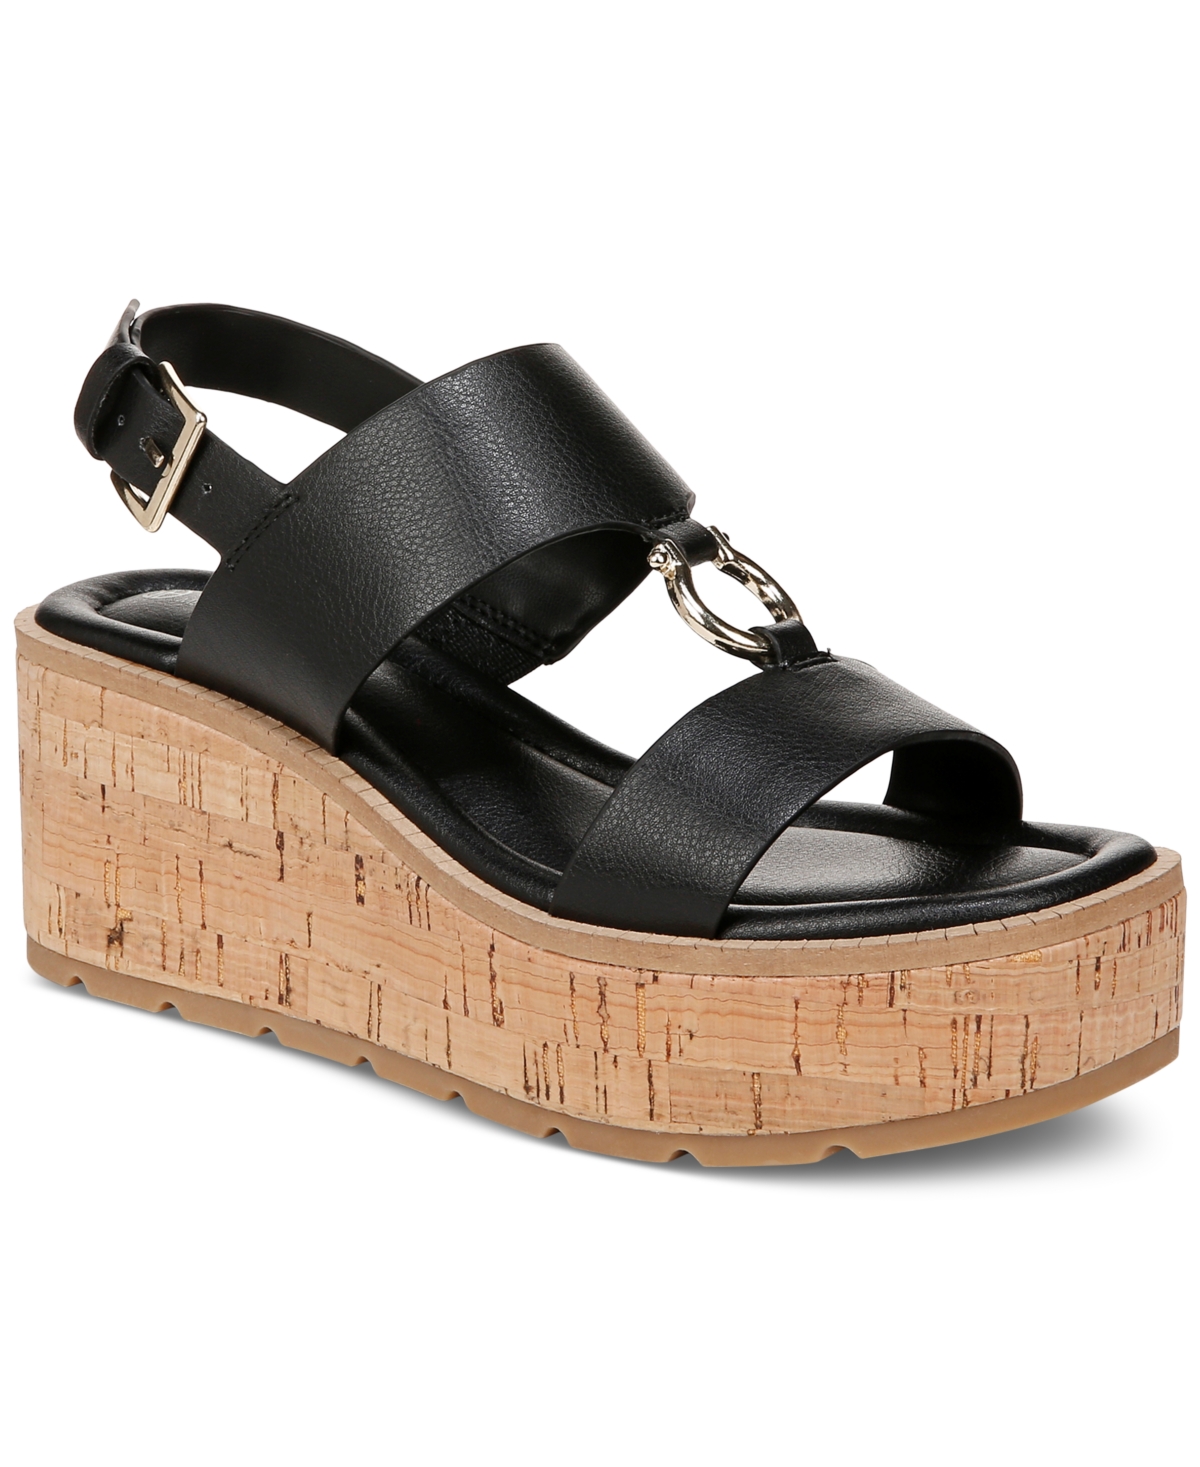 Harperr Memory Foam Platform Wedge Sandals, Created for Macy's - Cinnamon Croc